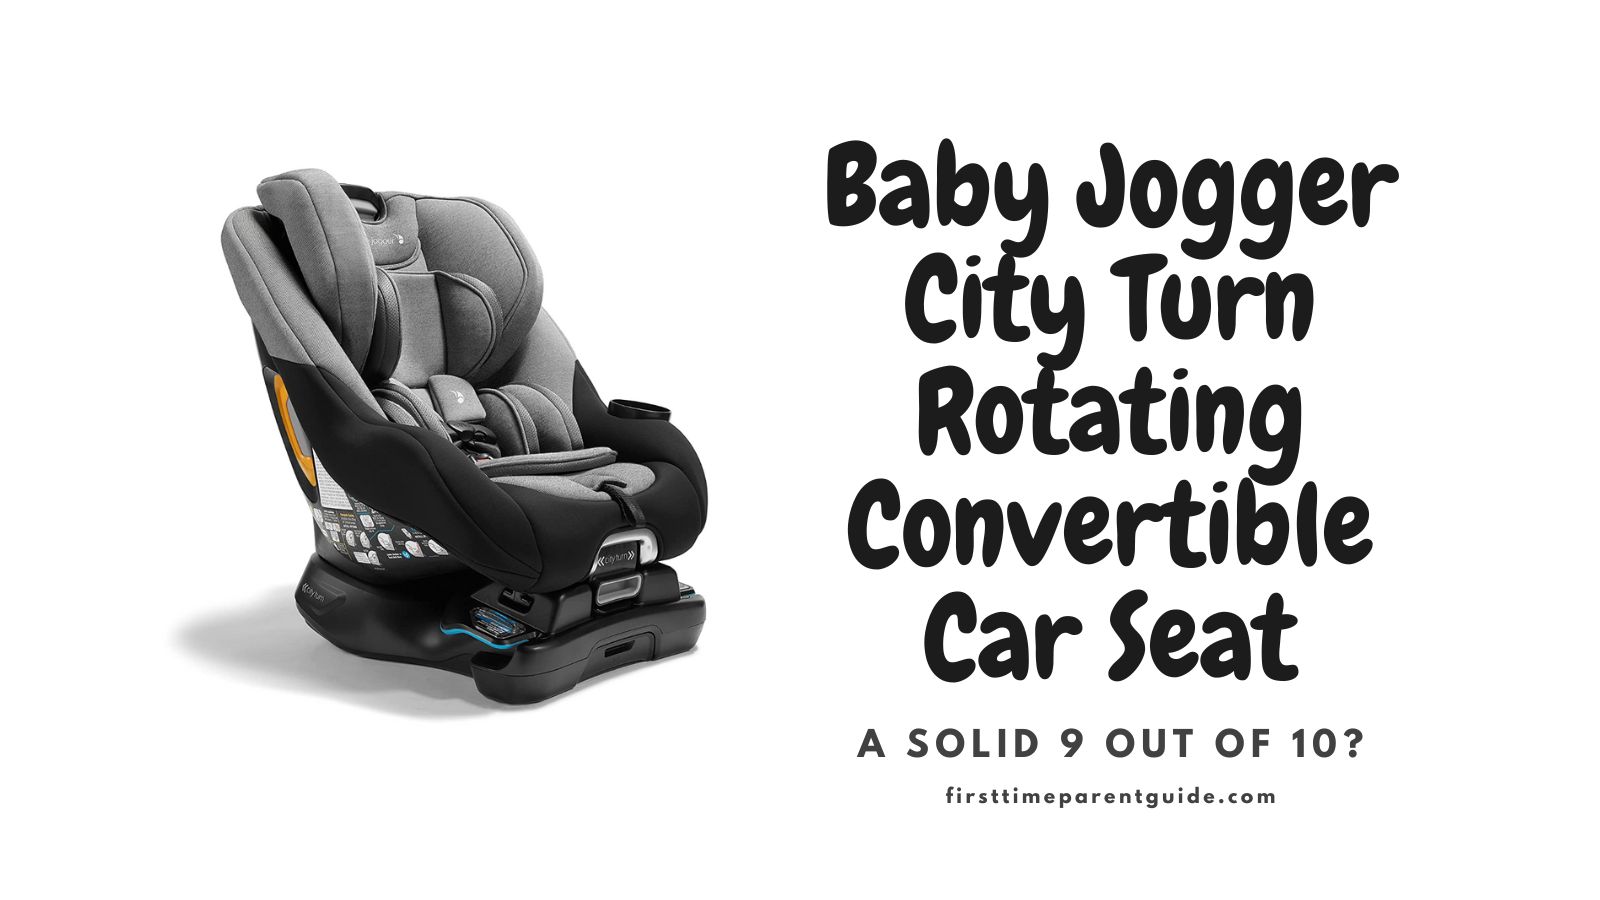 the Baby Jogger City Turn Rotating Convertible Car Seat